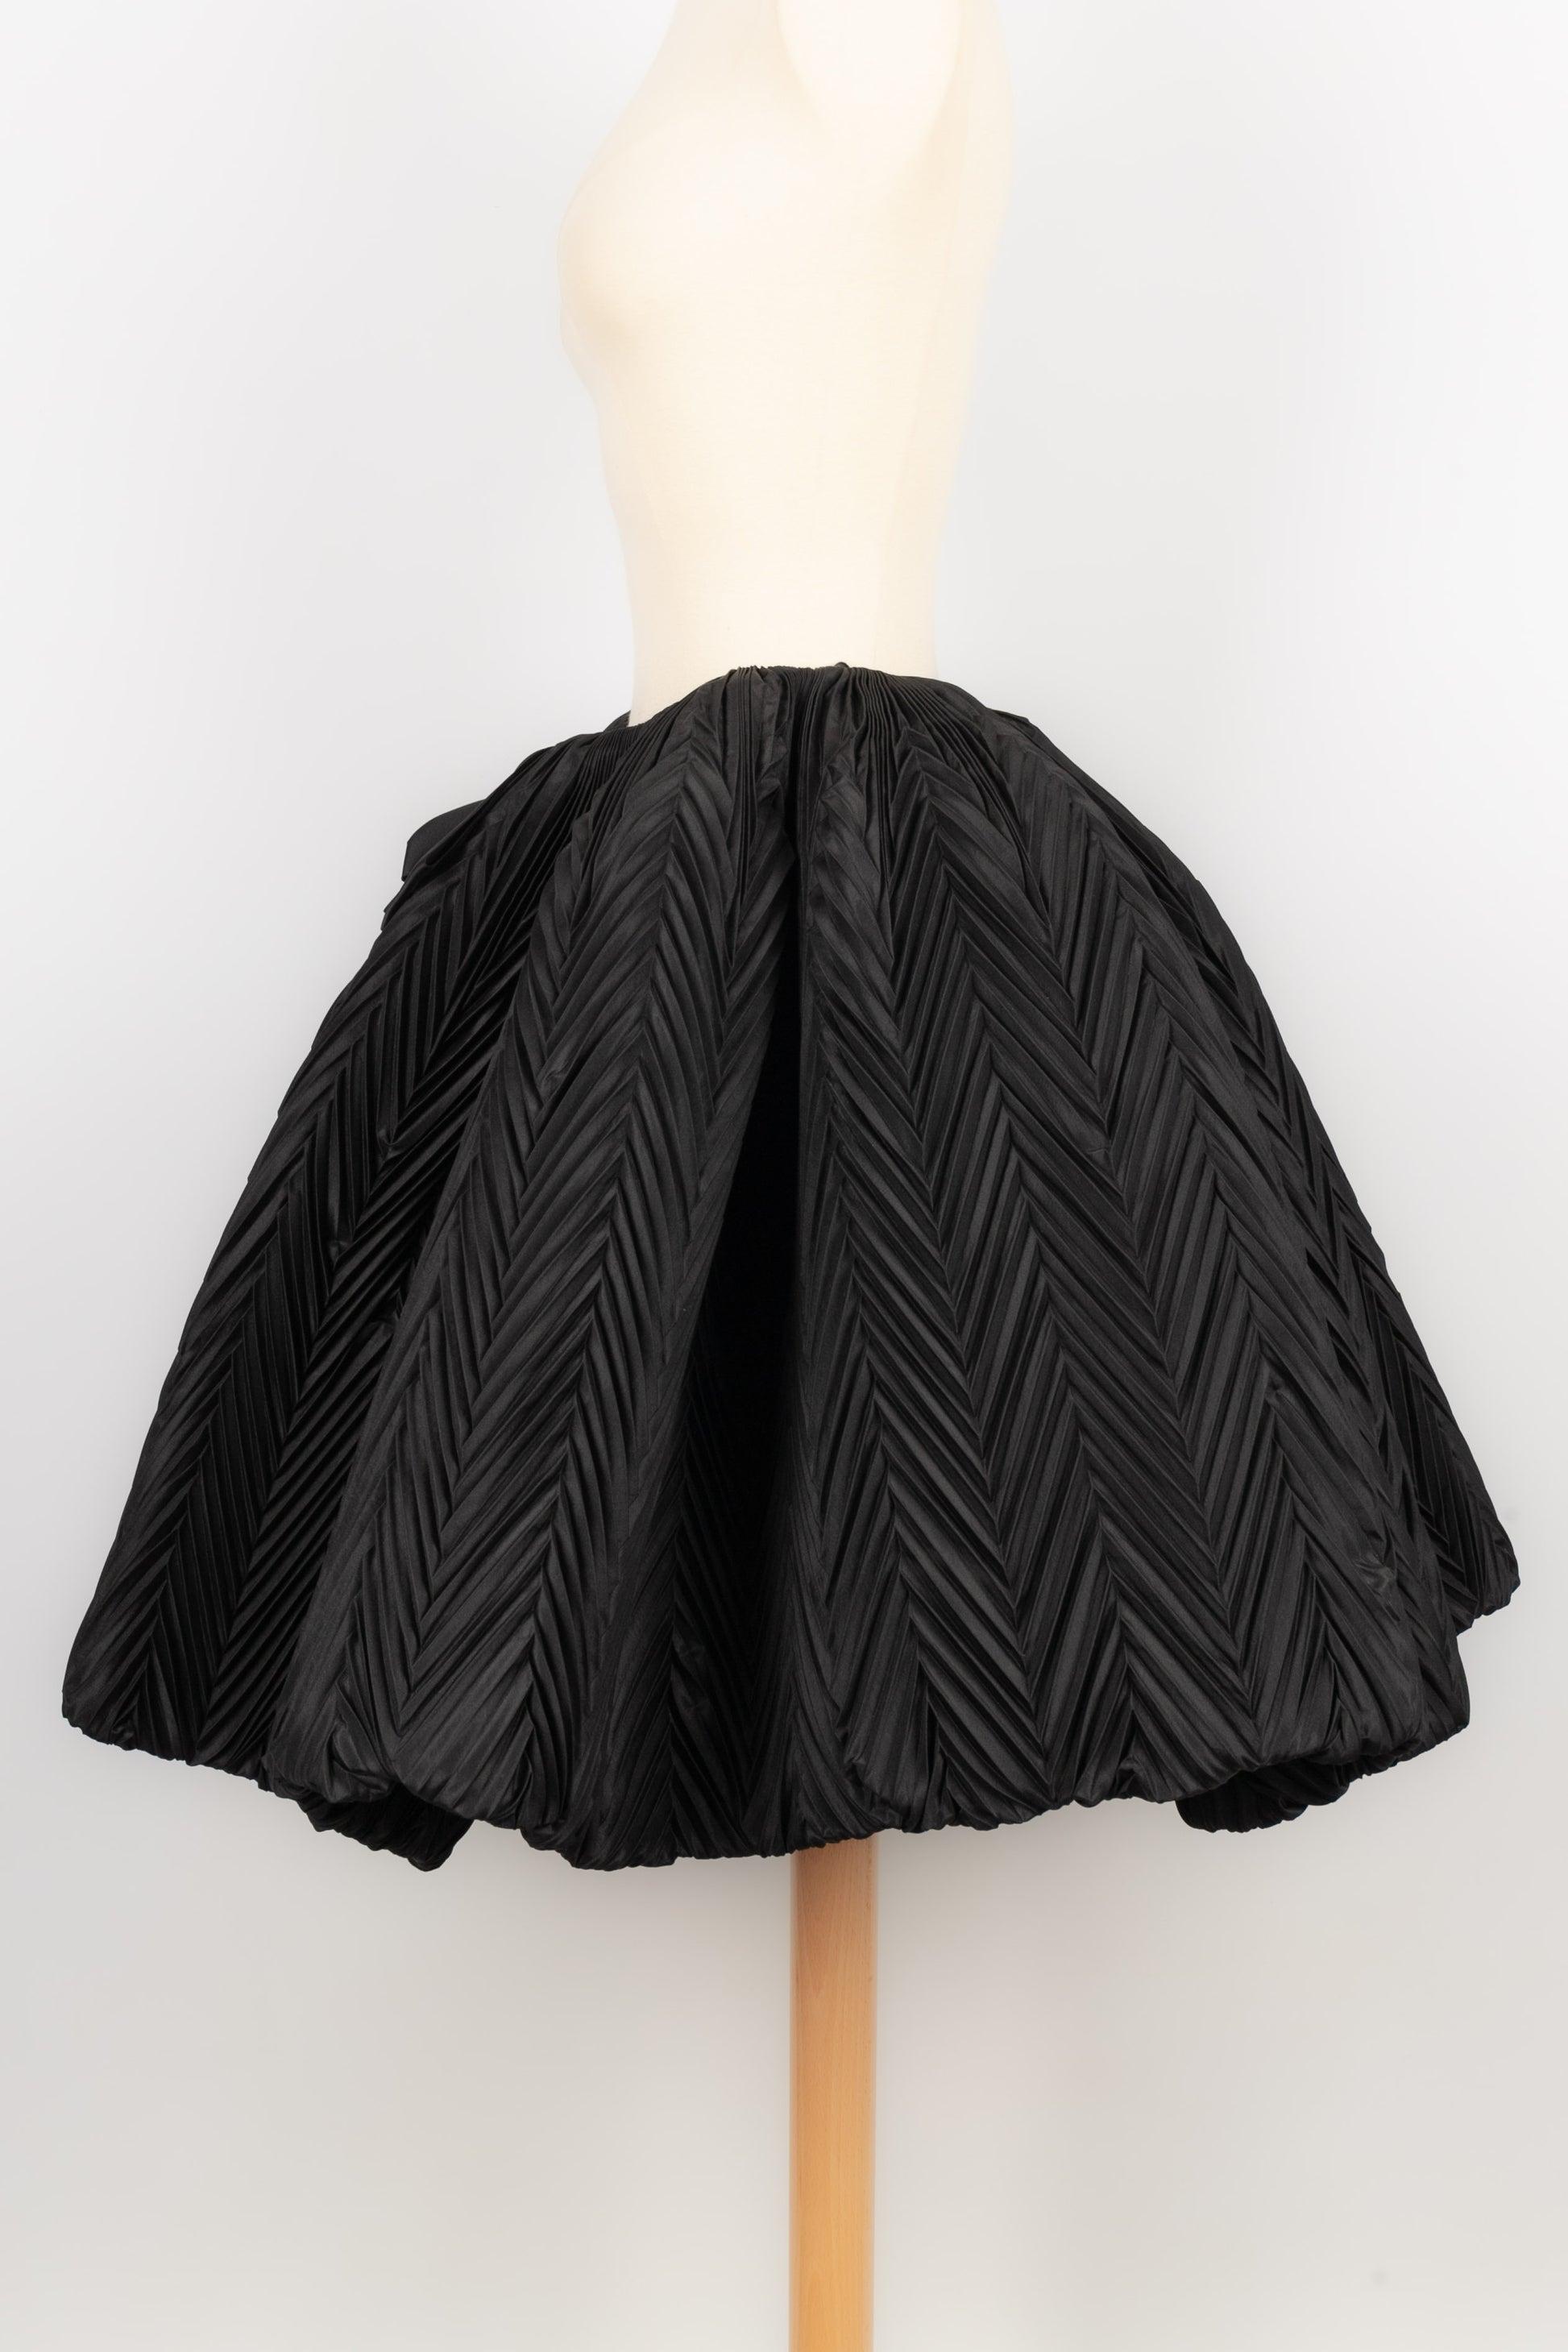 Nina Ricci Haute Couture - Jupe circulaire recouverte de taffetas noir Pour femmes en vente